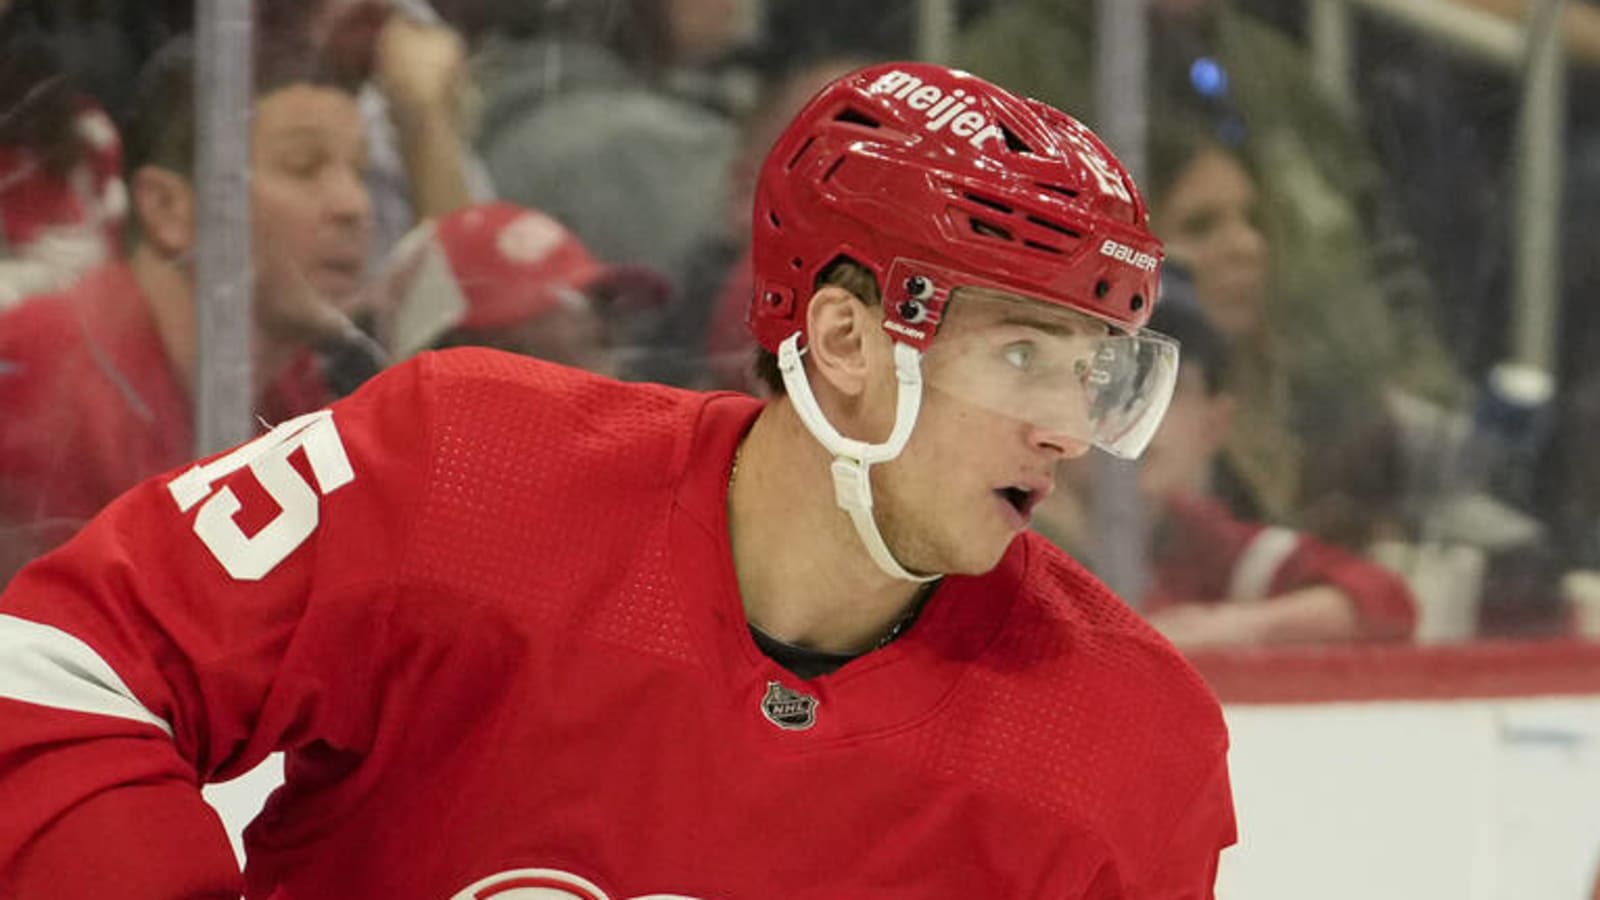 Jakub Vrana returns to Detroit Red Wings after entering NHL player